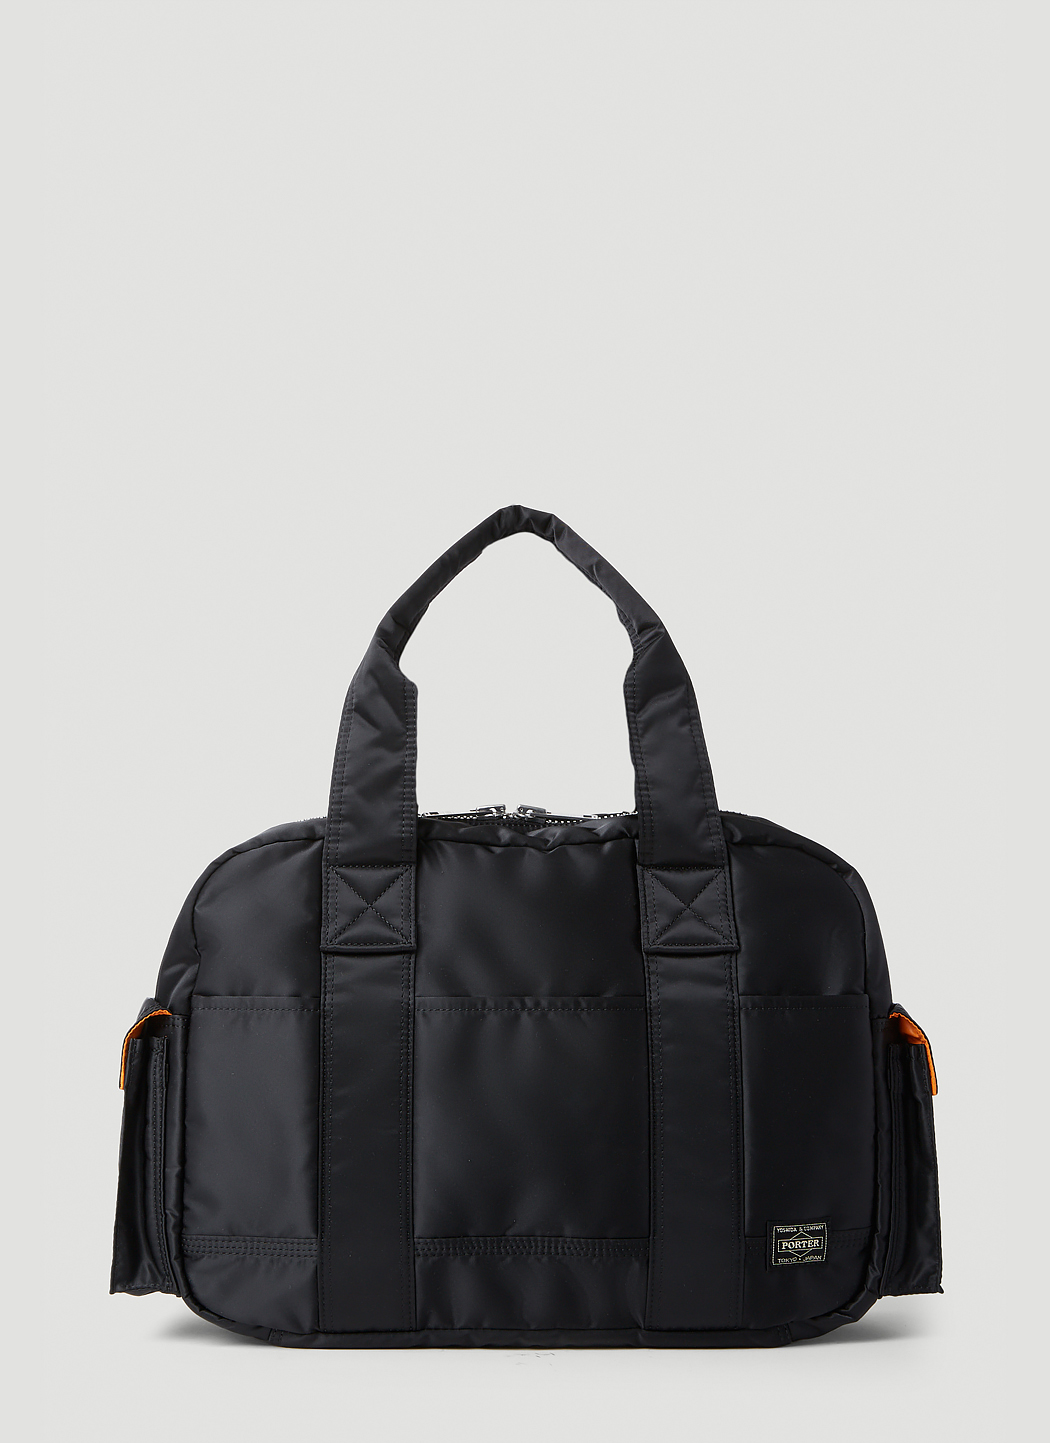 Porter-Yoshida & Co Tanker Duffle Bag in Black | LN-CC®